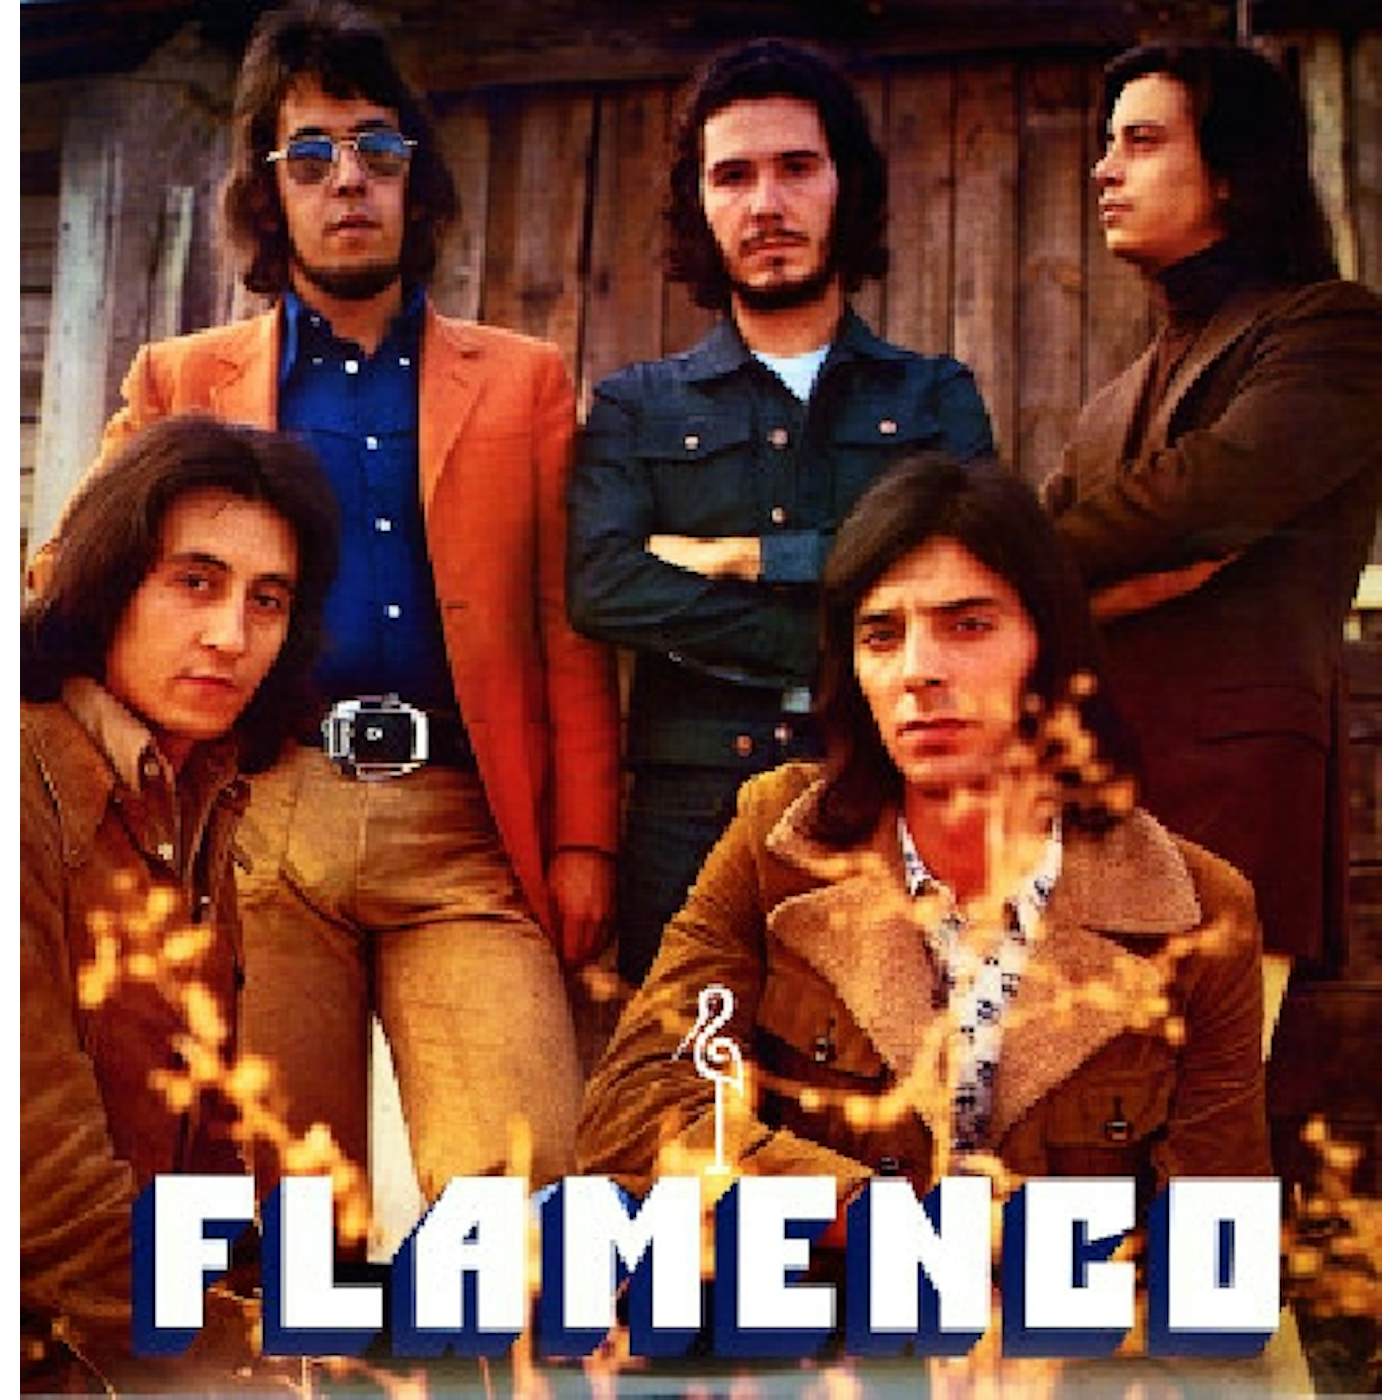 Flamenco Vinyl Record